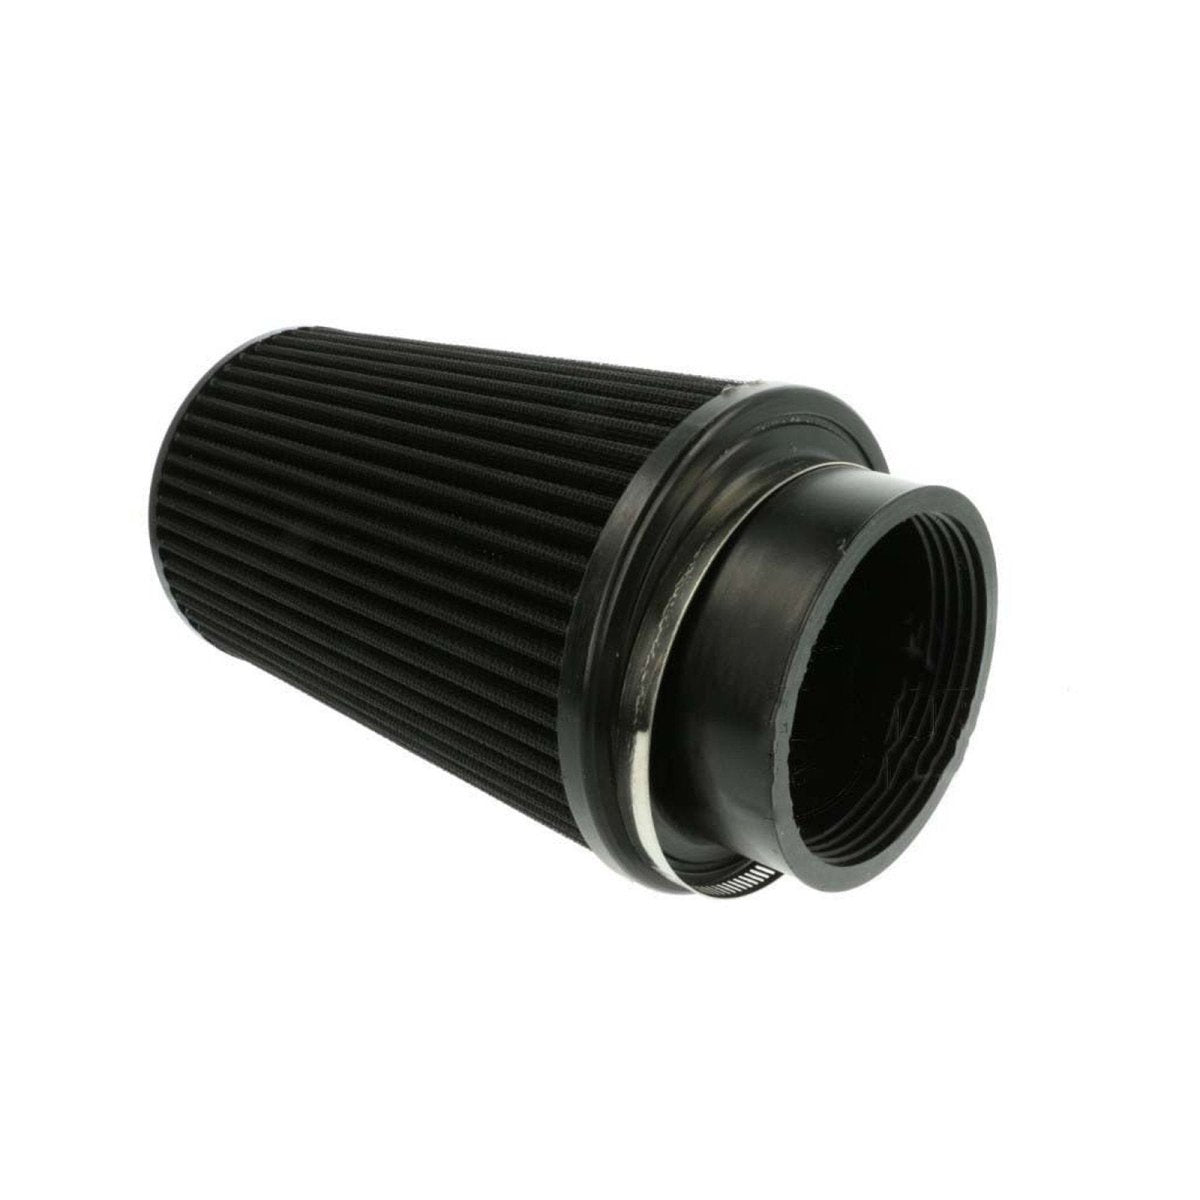 FAMEFORM universal sports air filter black 200mm - PARTS33 GmbH